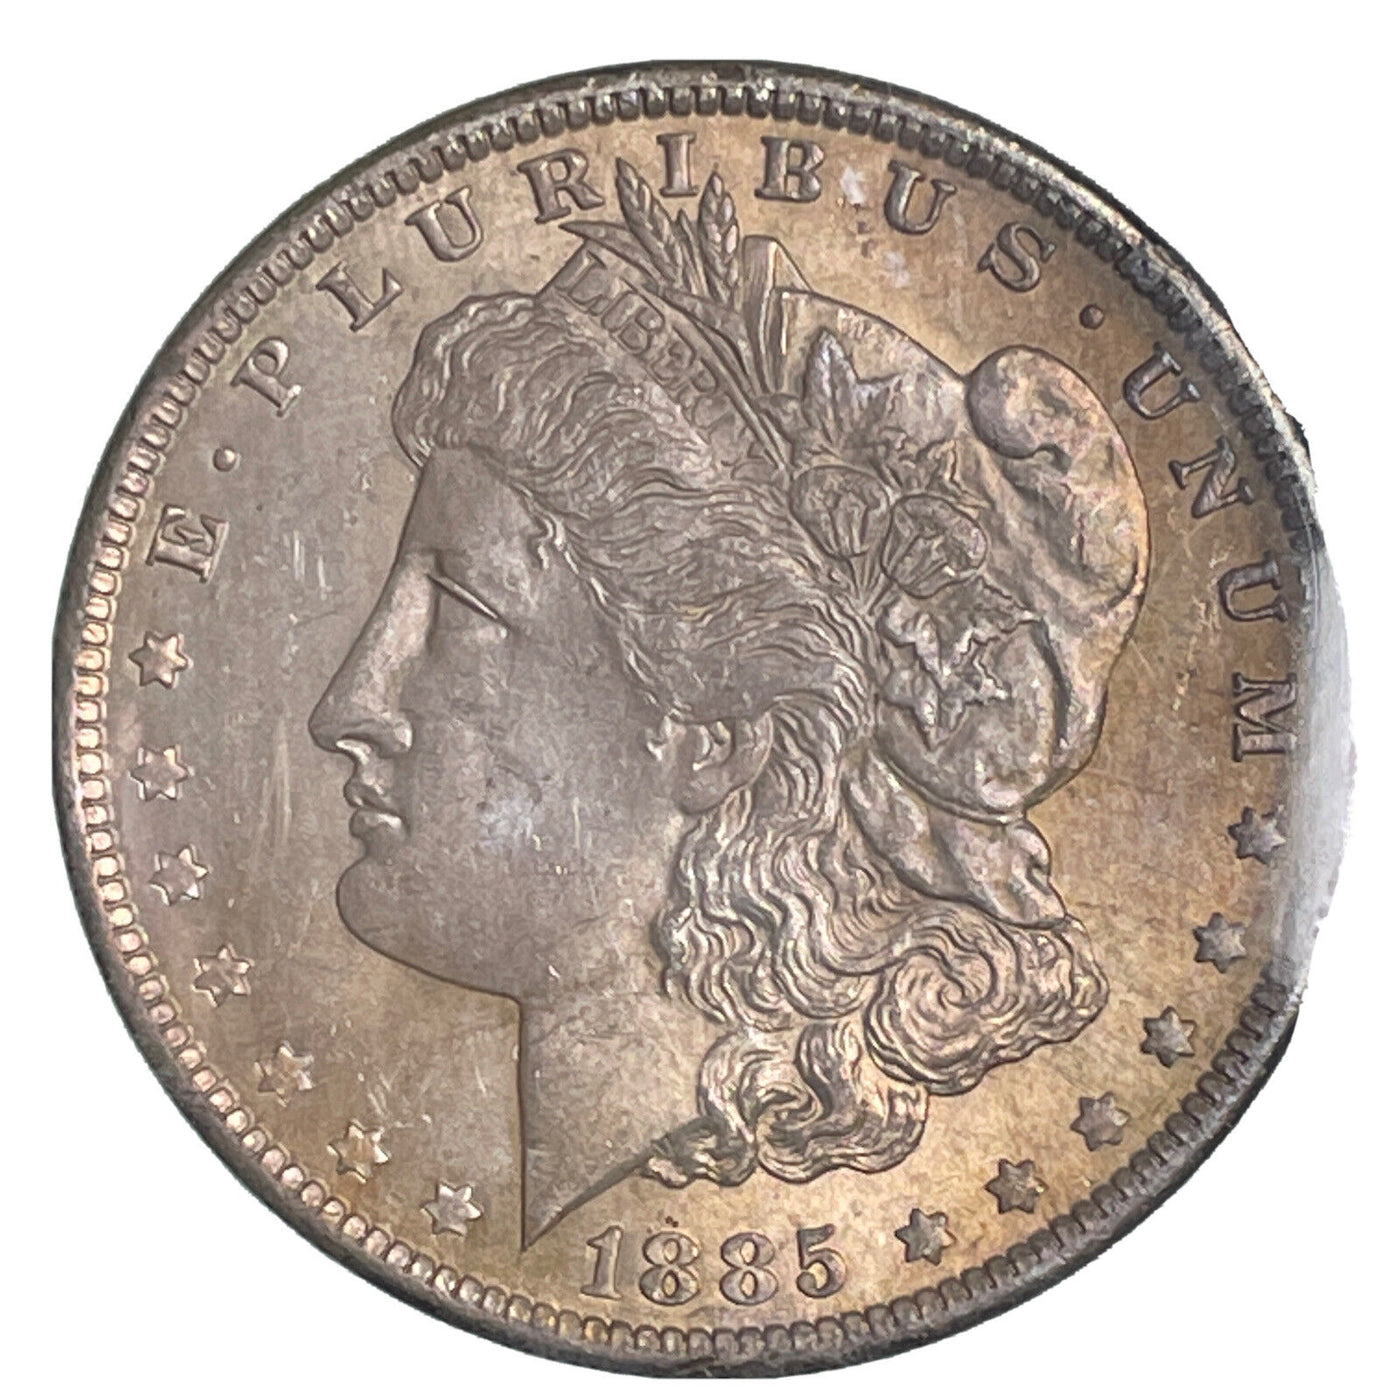 1885o morgan silver$ Superb PQ Unc Super Details Lt Golden Tones Price Slashed